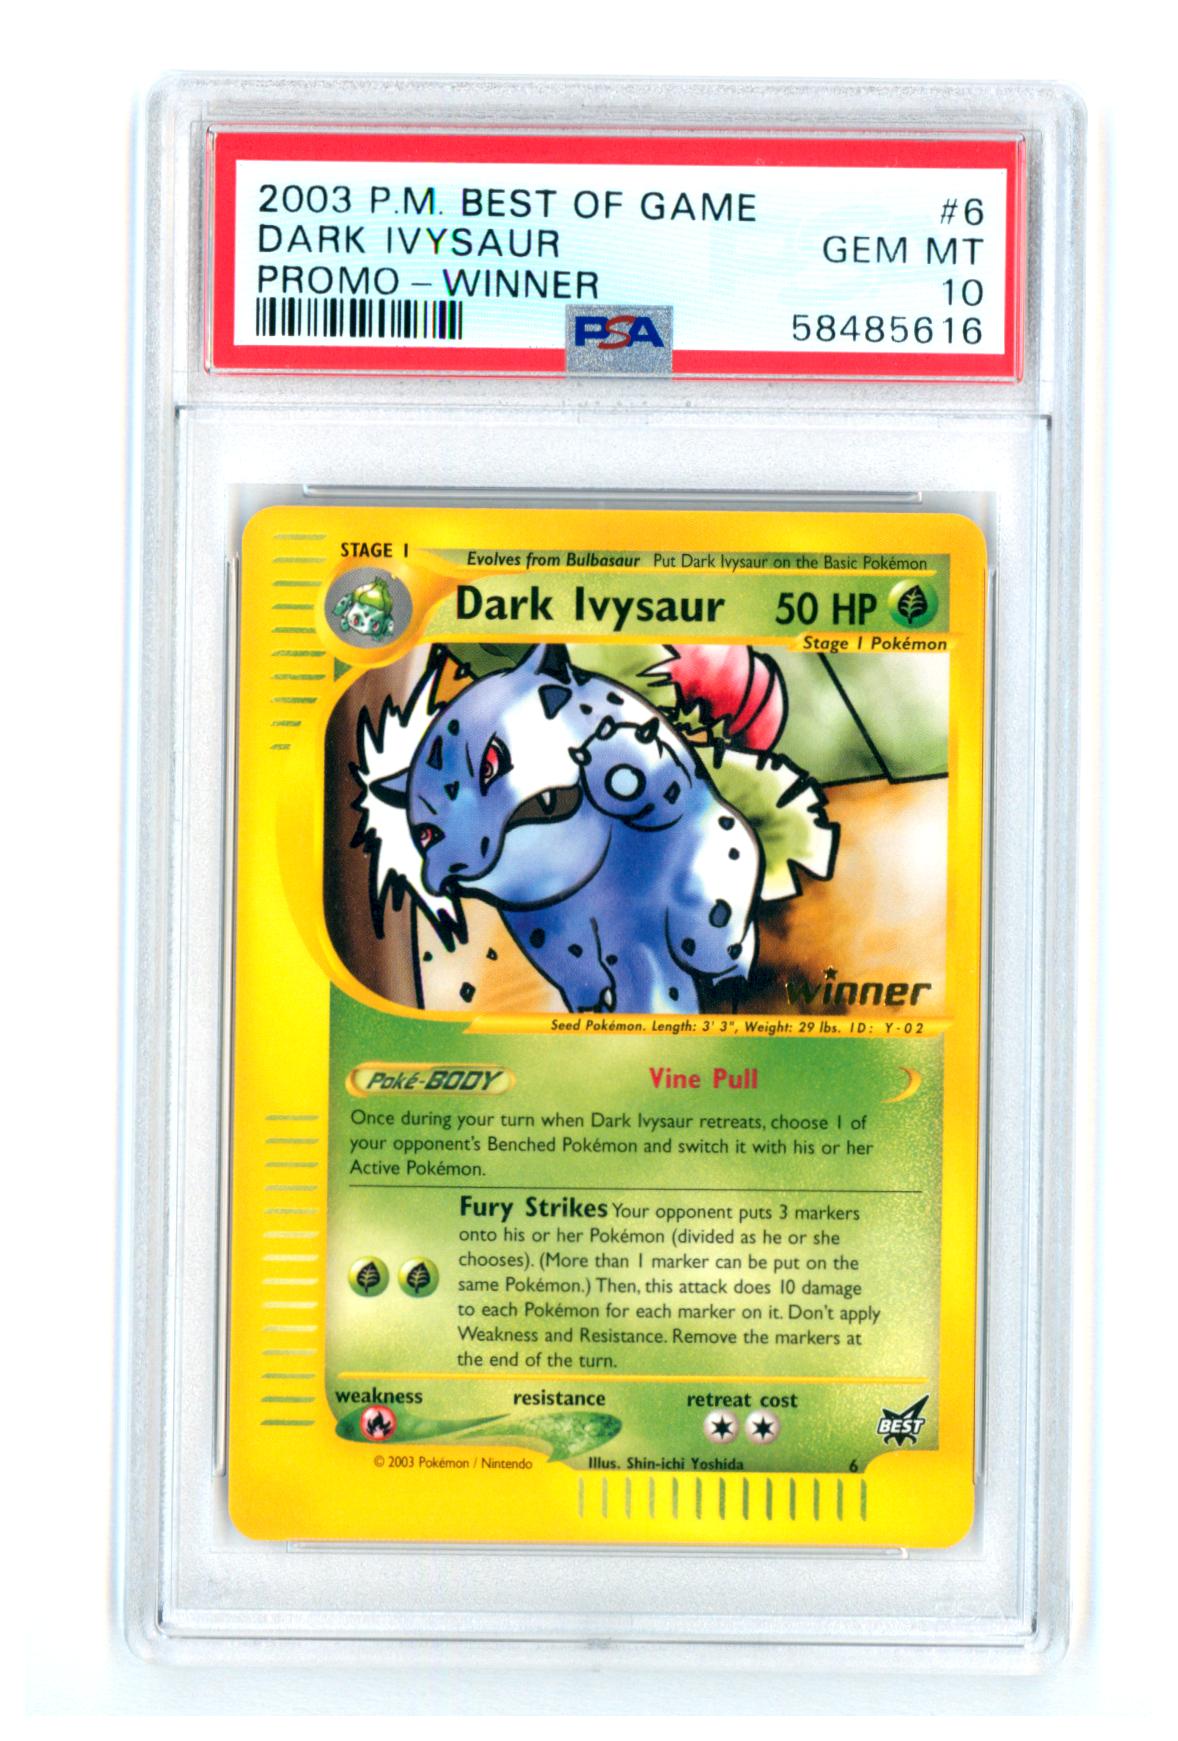 Dark Ivysaur - Best of Game Promo 6 - Winner Stamp - PSA 10 GEM MINT - Pokémon